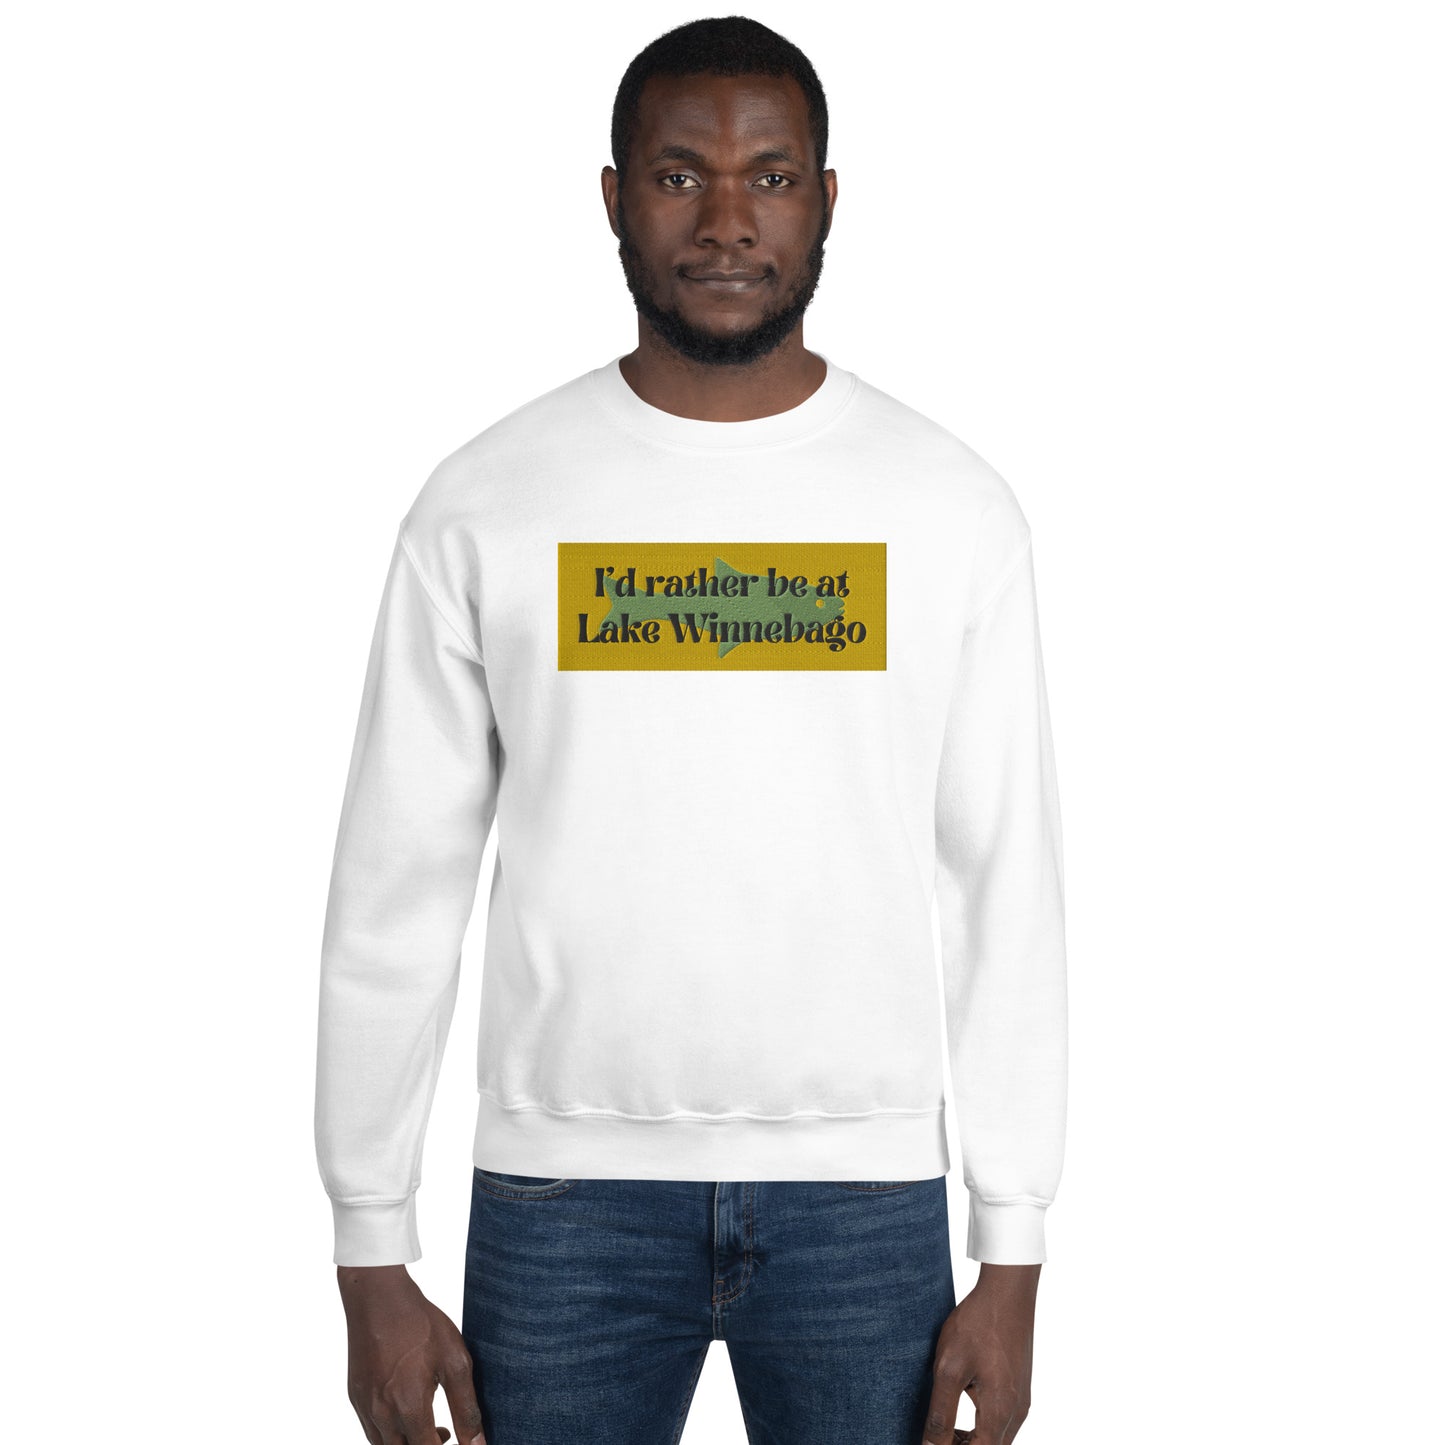 I'd Rather Be At Lake Winnebago Embroidered Sweatshirt